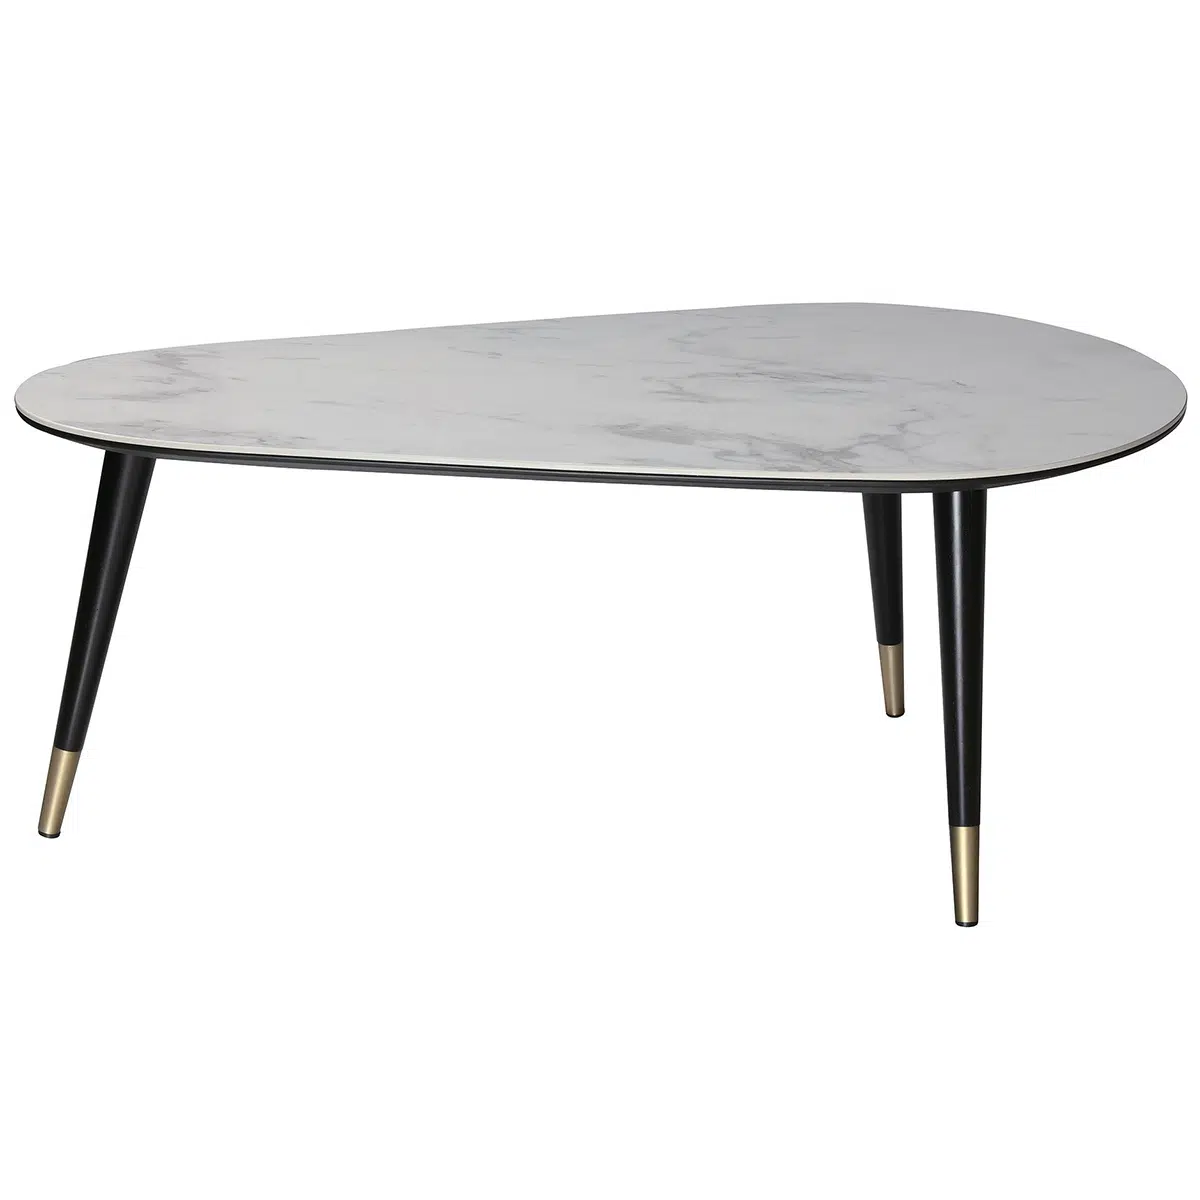 Table basse design effet marbre